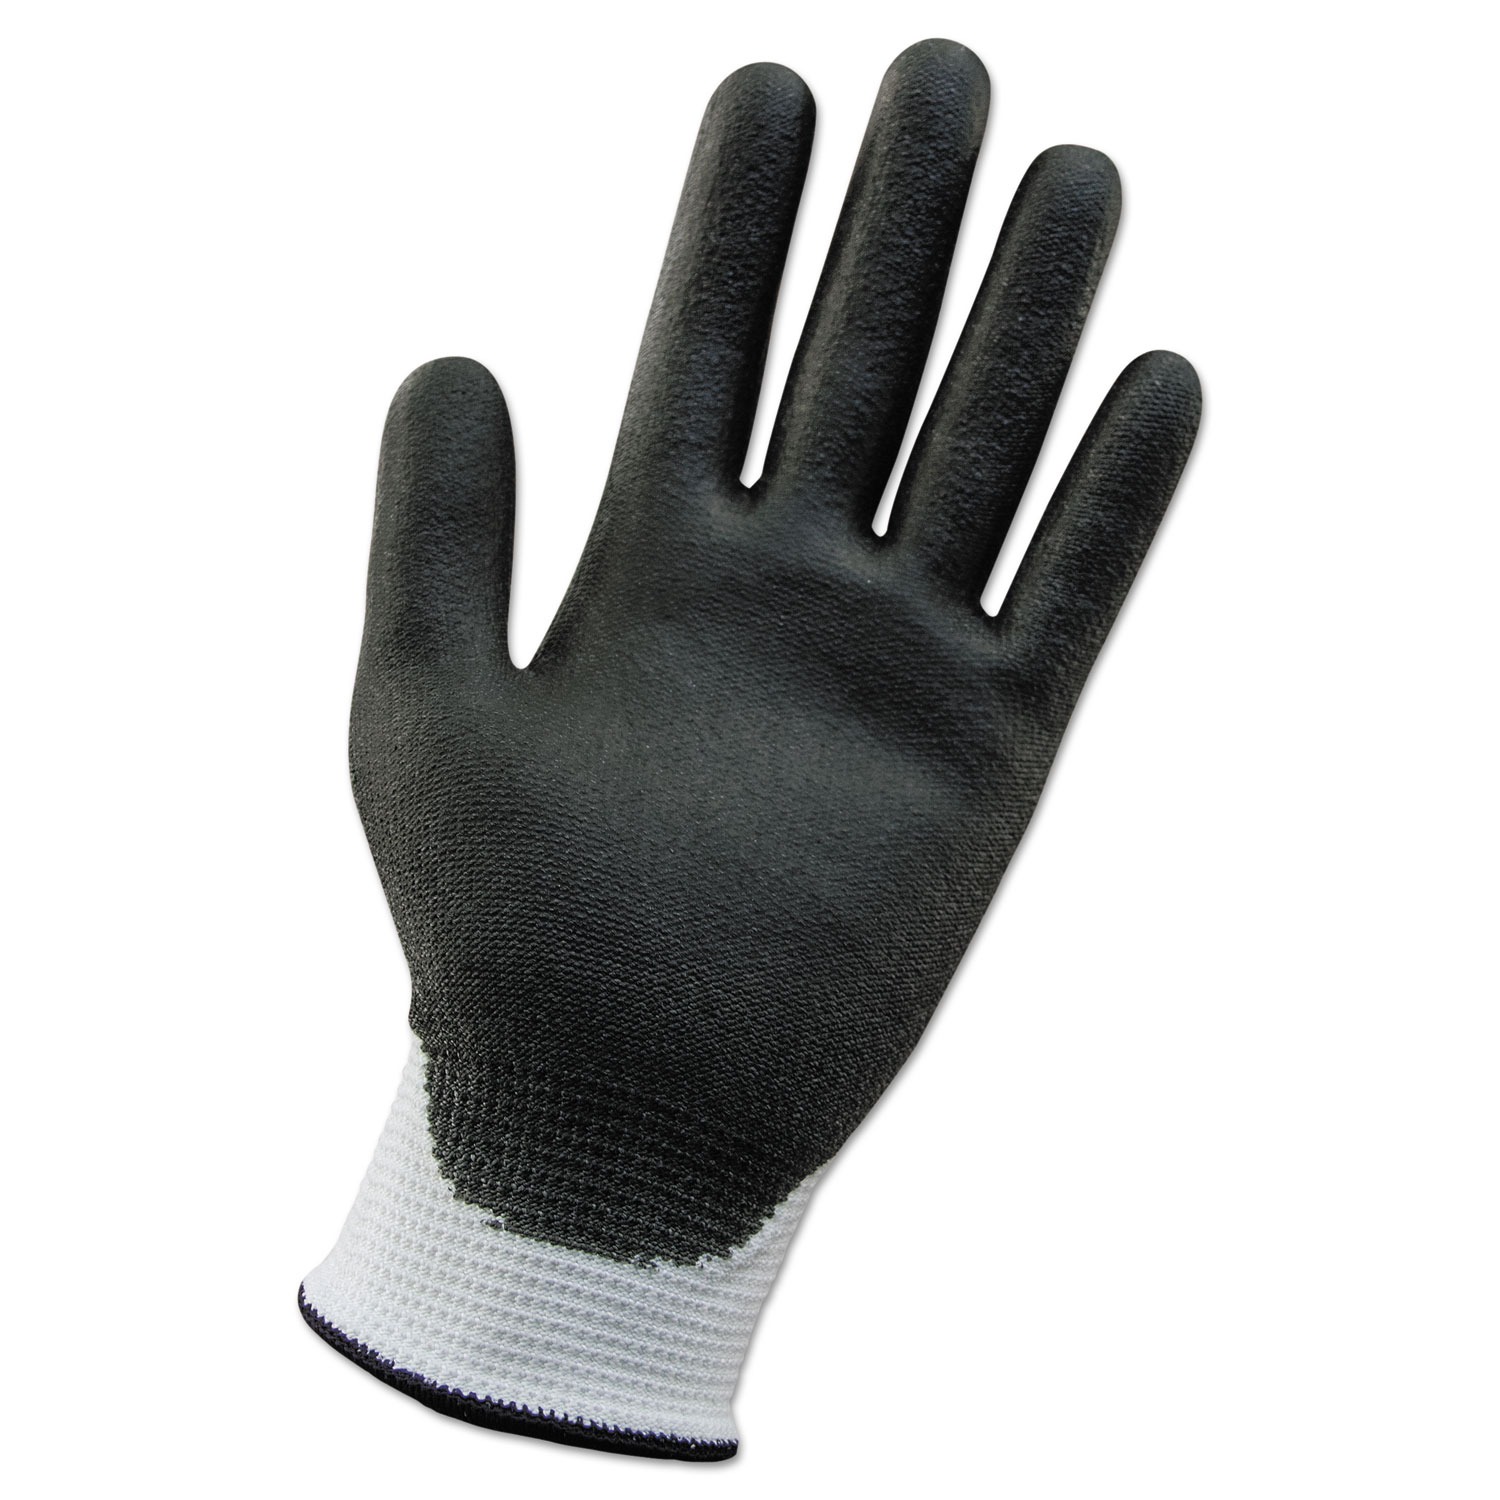  KleenGuard 38691 G60 ANSI Level 2 Cut-Resistant Glove, White/Blk, 240mm Length, Large/SZ 9, 12 PR (KCC38691) 